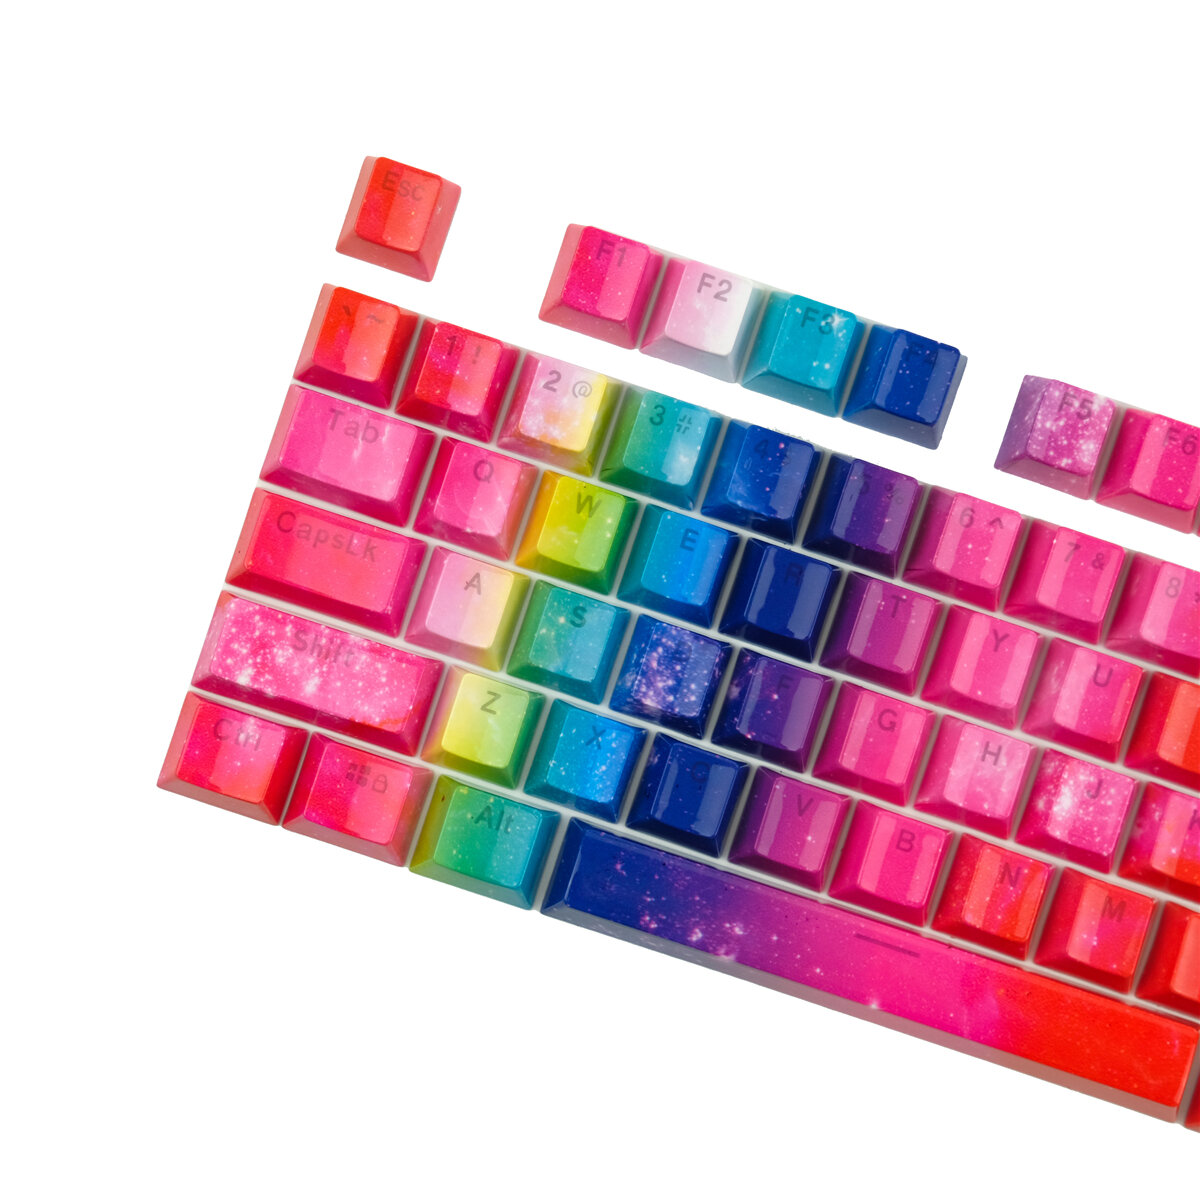 108 Keys Rainbow Keycap Set OEM Profile ABS Colorful Keycaps for 61/87/104/108 Keys Mechanical Keyboards COD